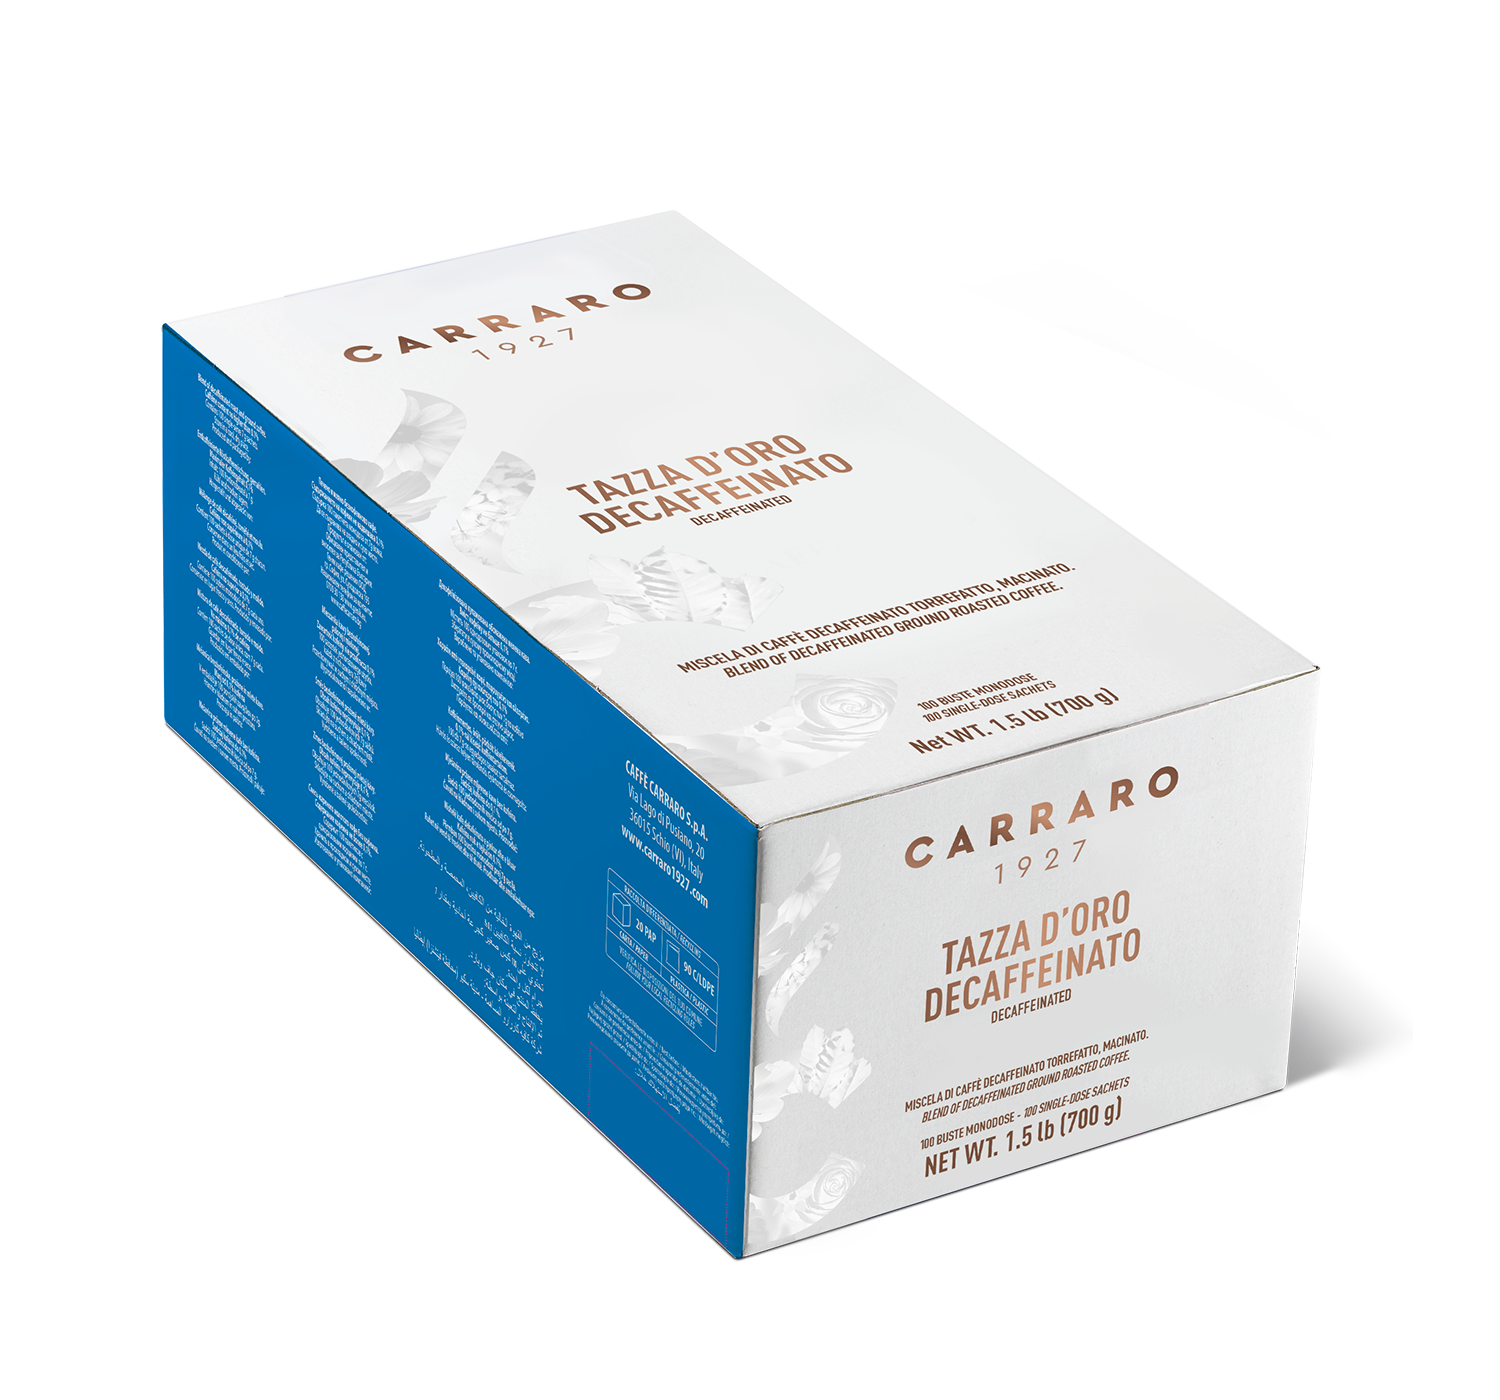 Decaffeinated - Tazza d’Oro decaffeinato – box with 100 bags 7 g each - Shop online Caffè Carraro